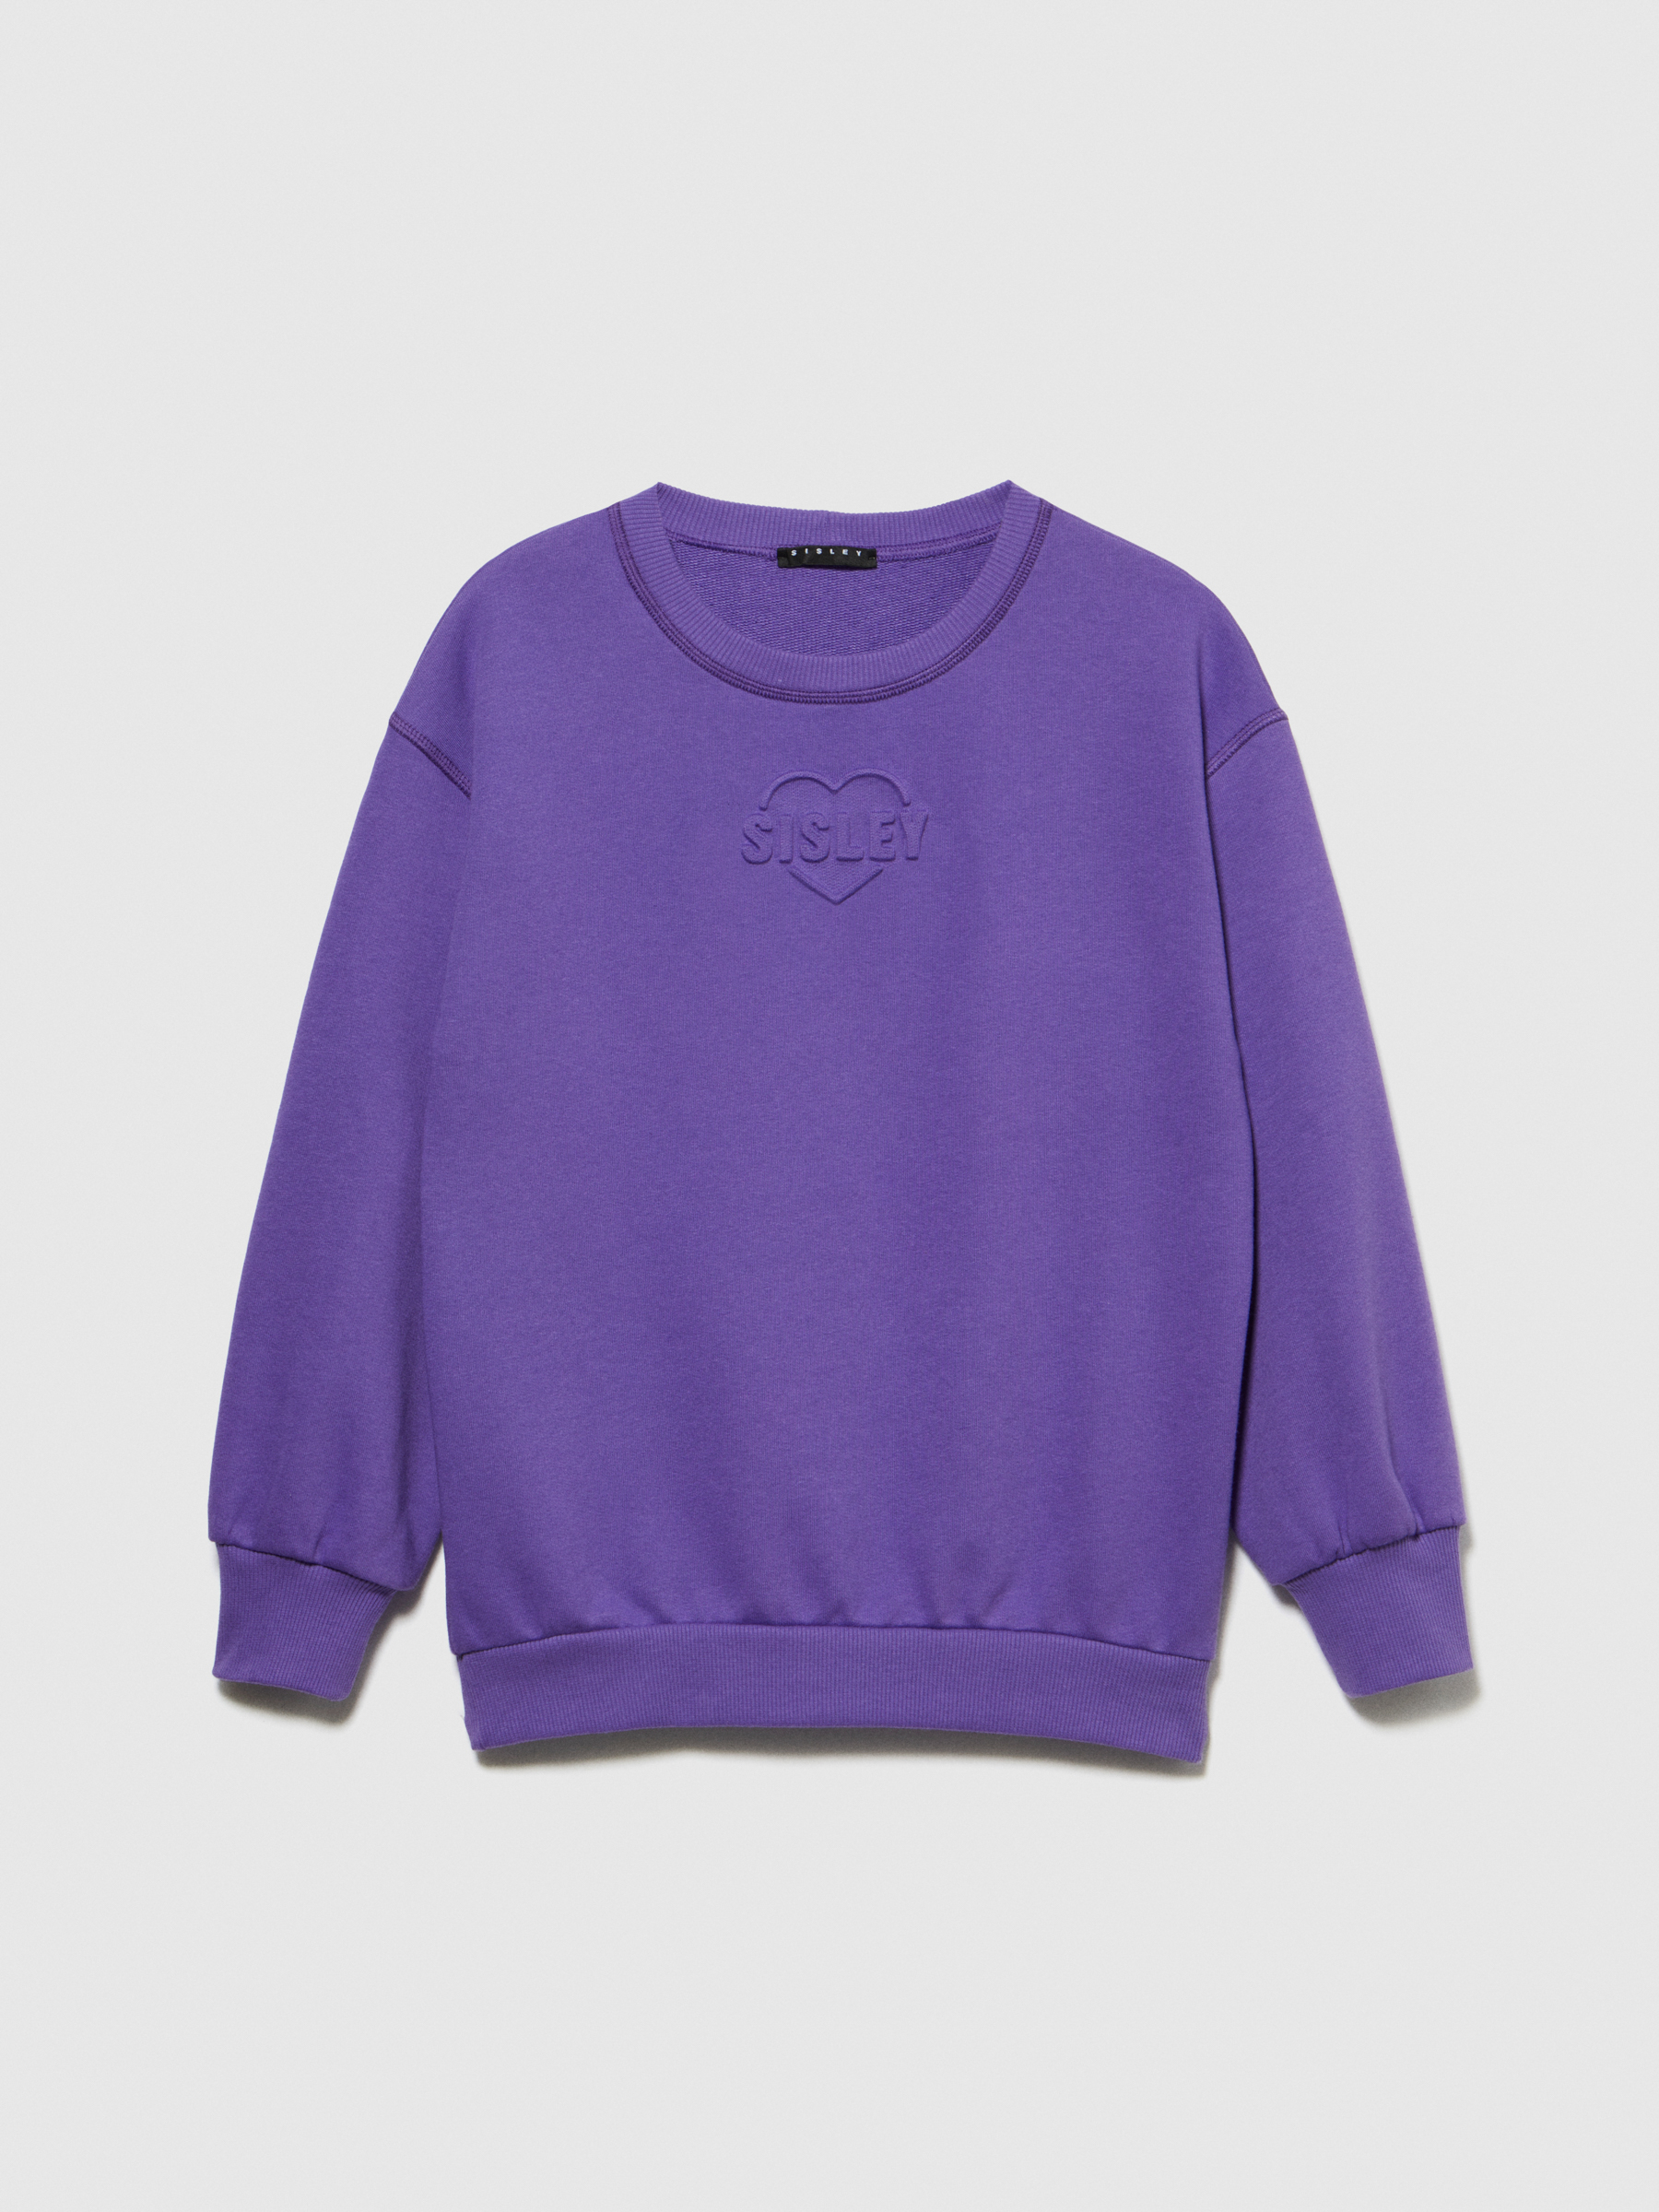 Sisley Young - Sweatshirt With Embossed Print, Woman, Violet, Size: EL